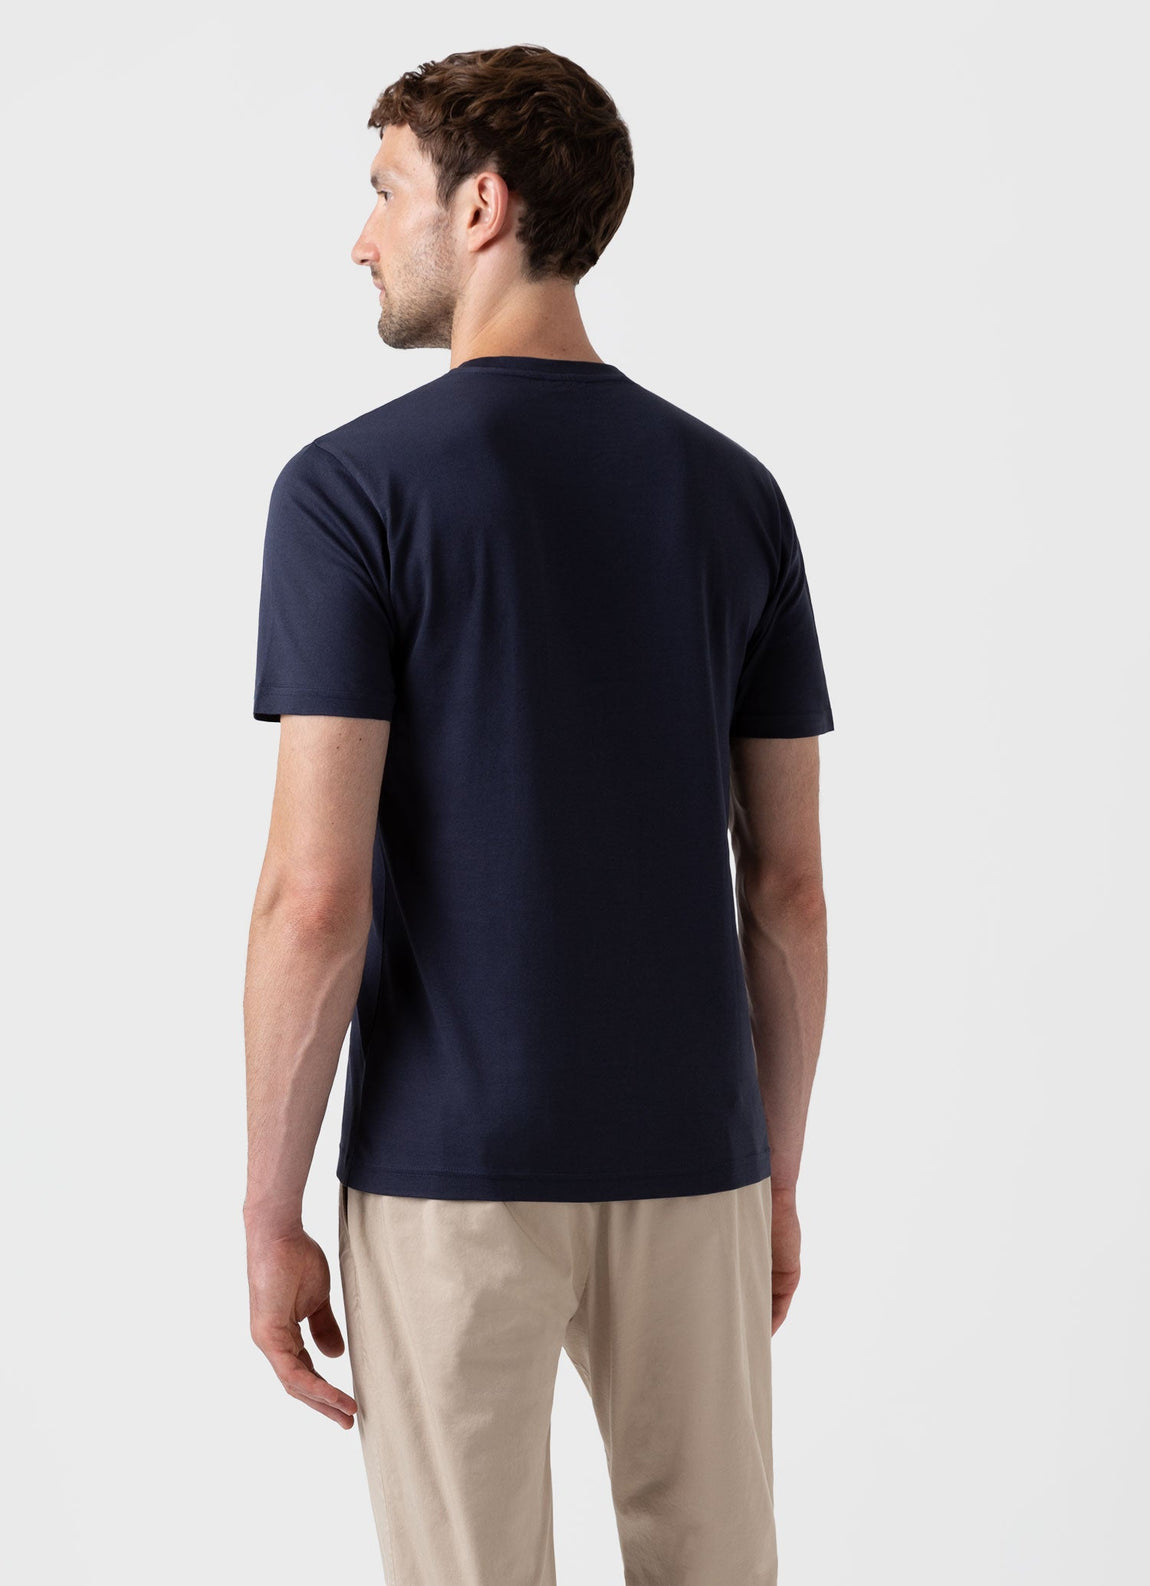 Sunspel Cotton Riviera T-Shirt - Navy - S